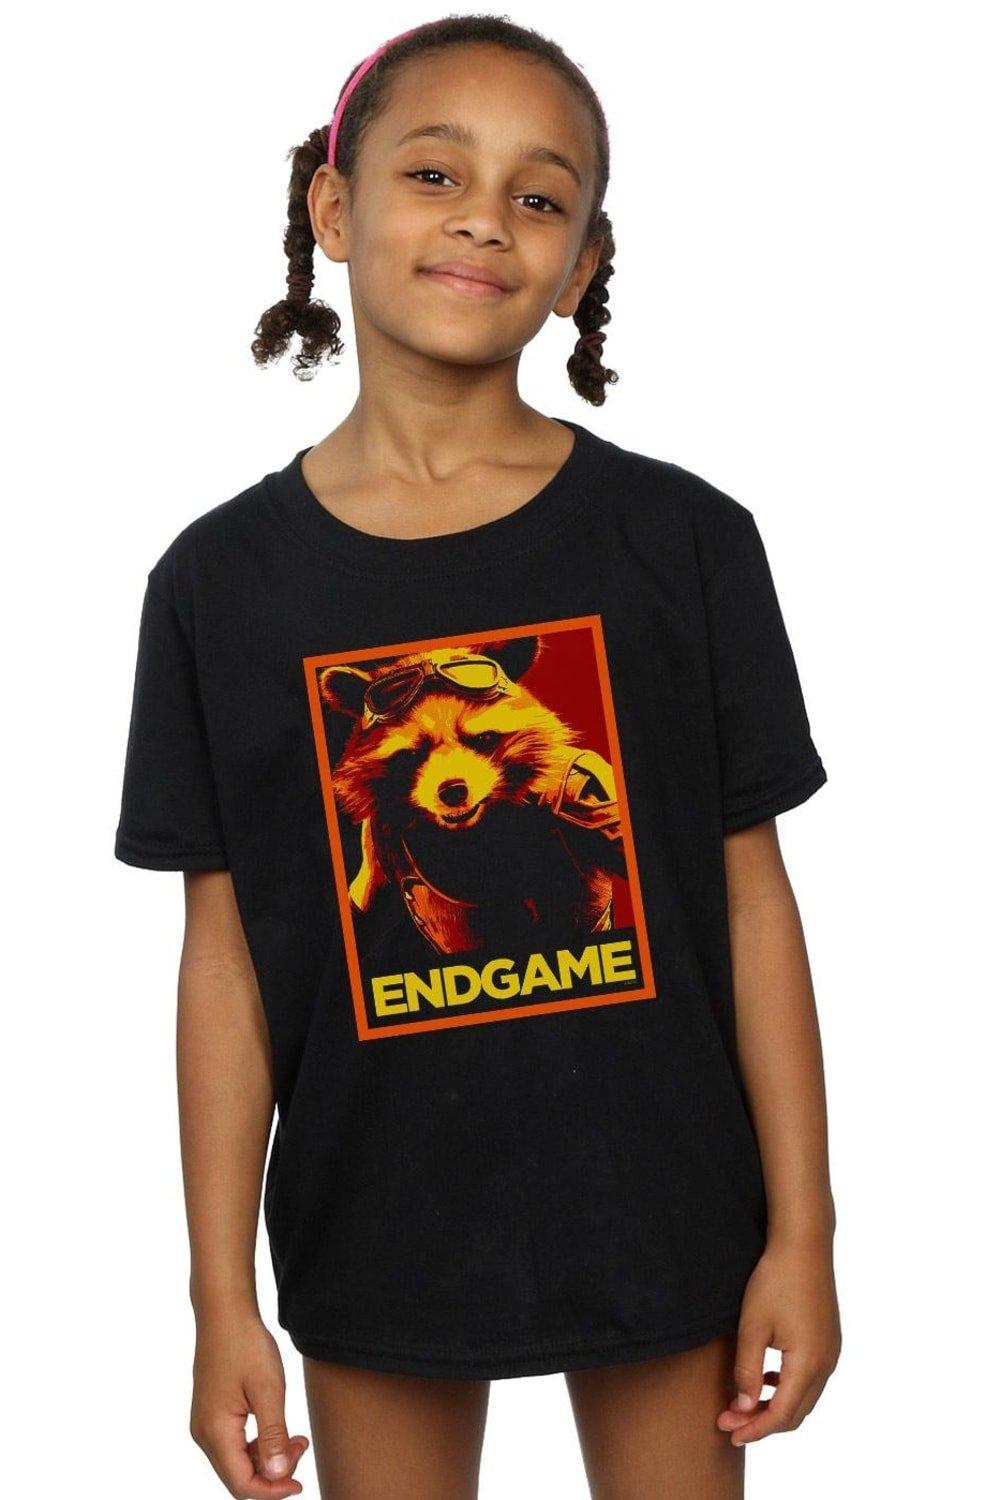 Avengers Endgame Rocket Poster Cotton T-Shirt